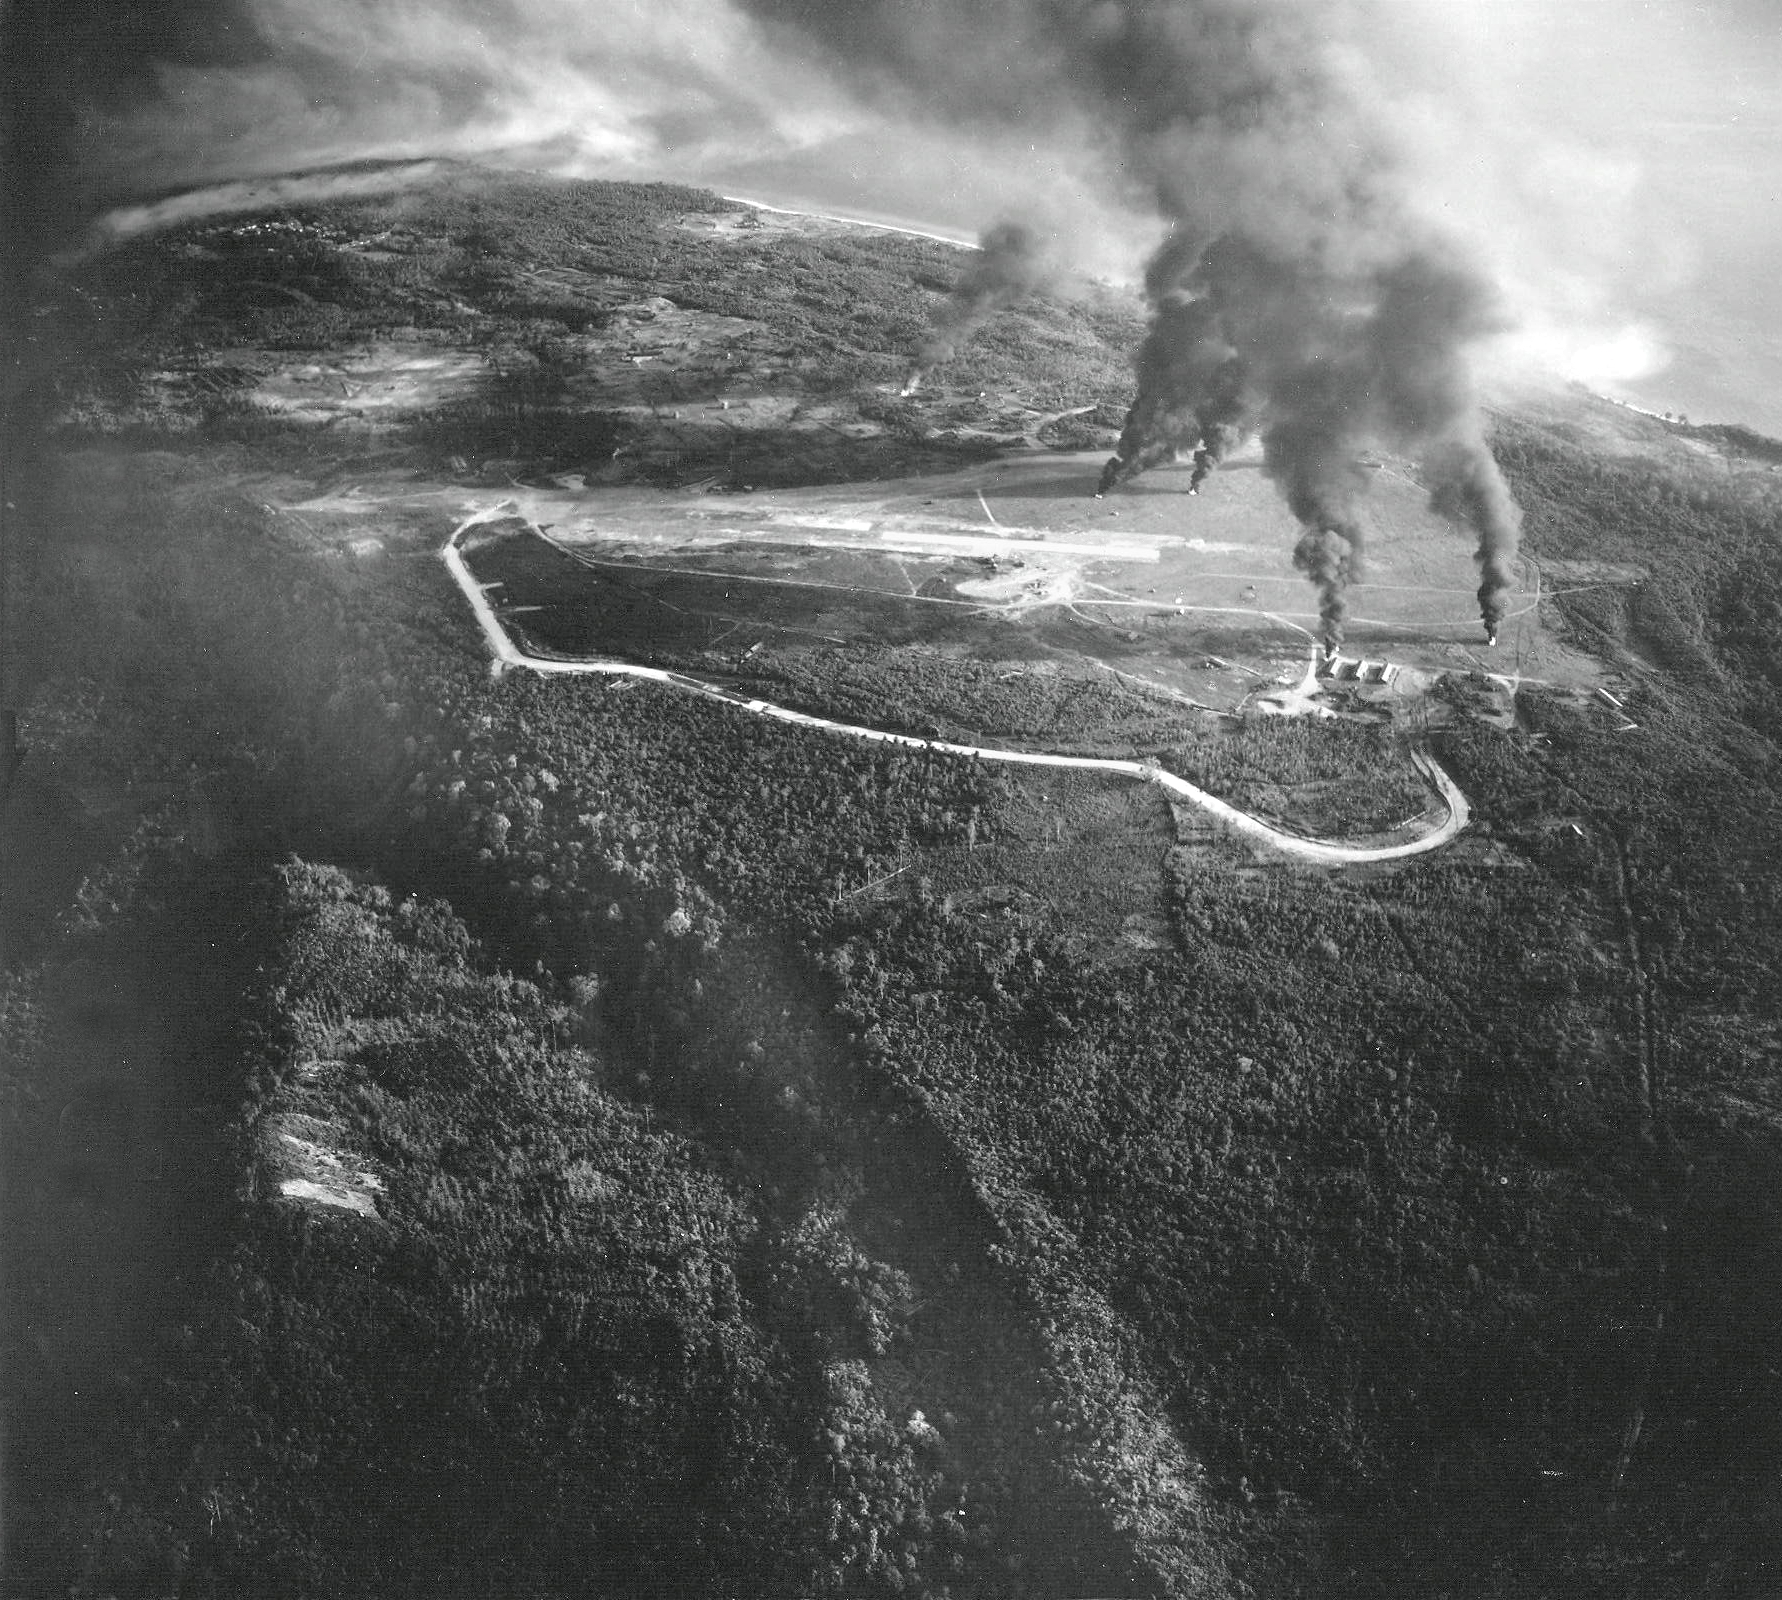 Lho Nga (Lhoknga) airfield under attack, Sumatra, Dutch East Indies, 19 Apr 1944